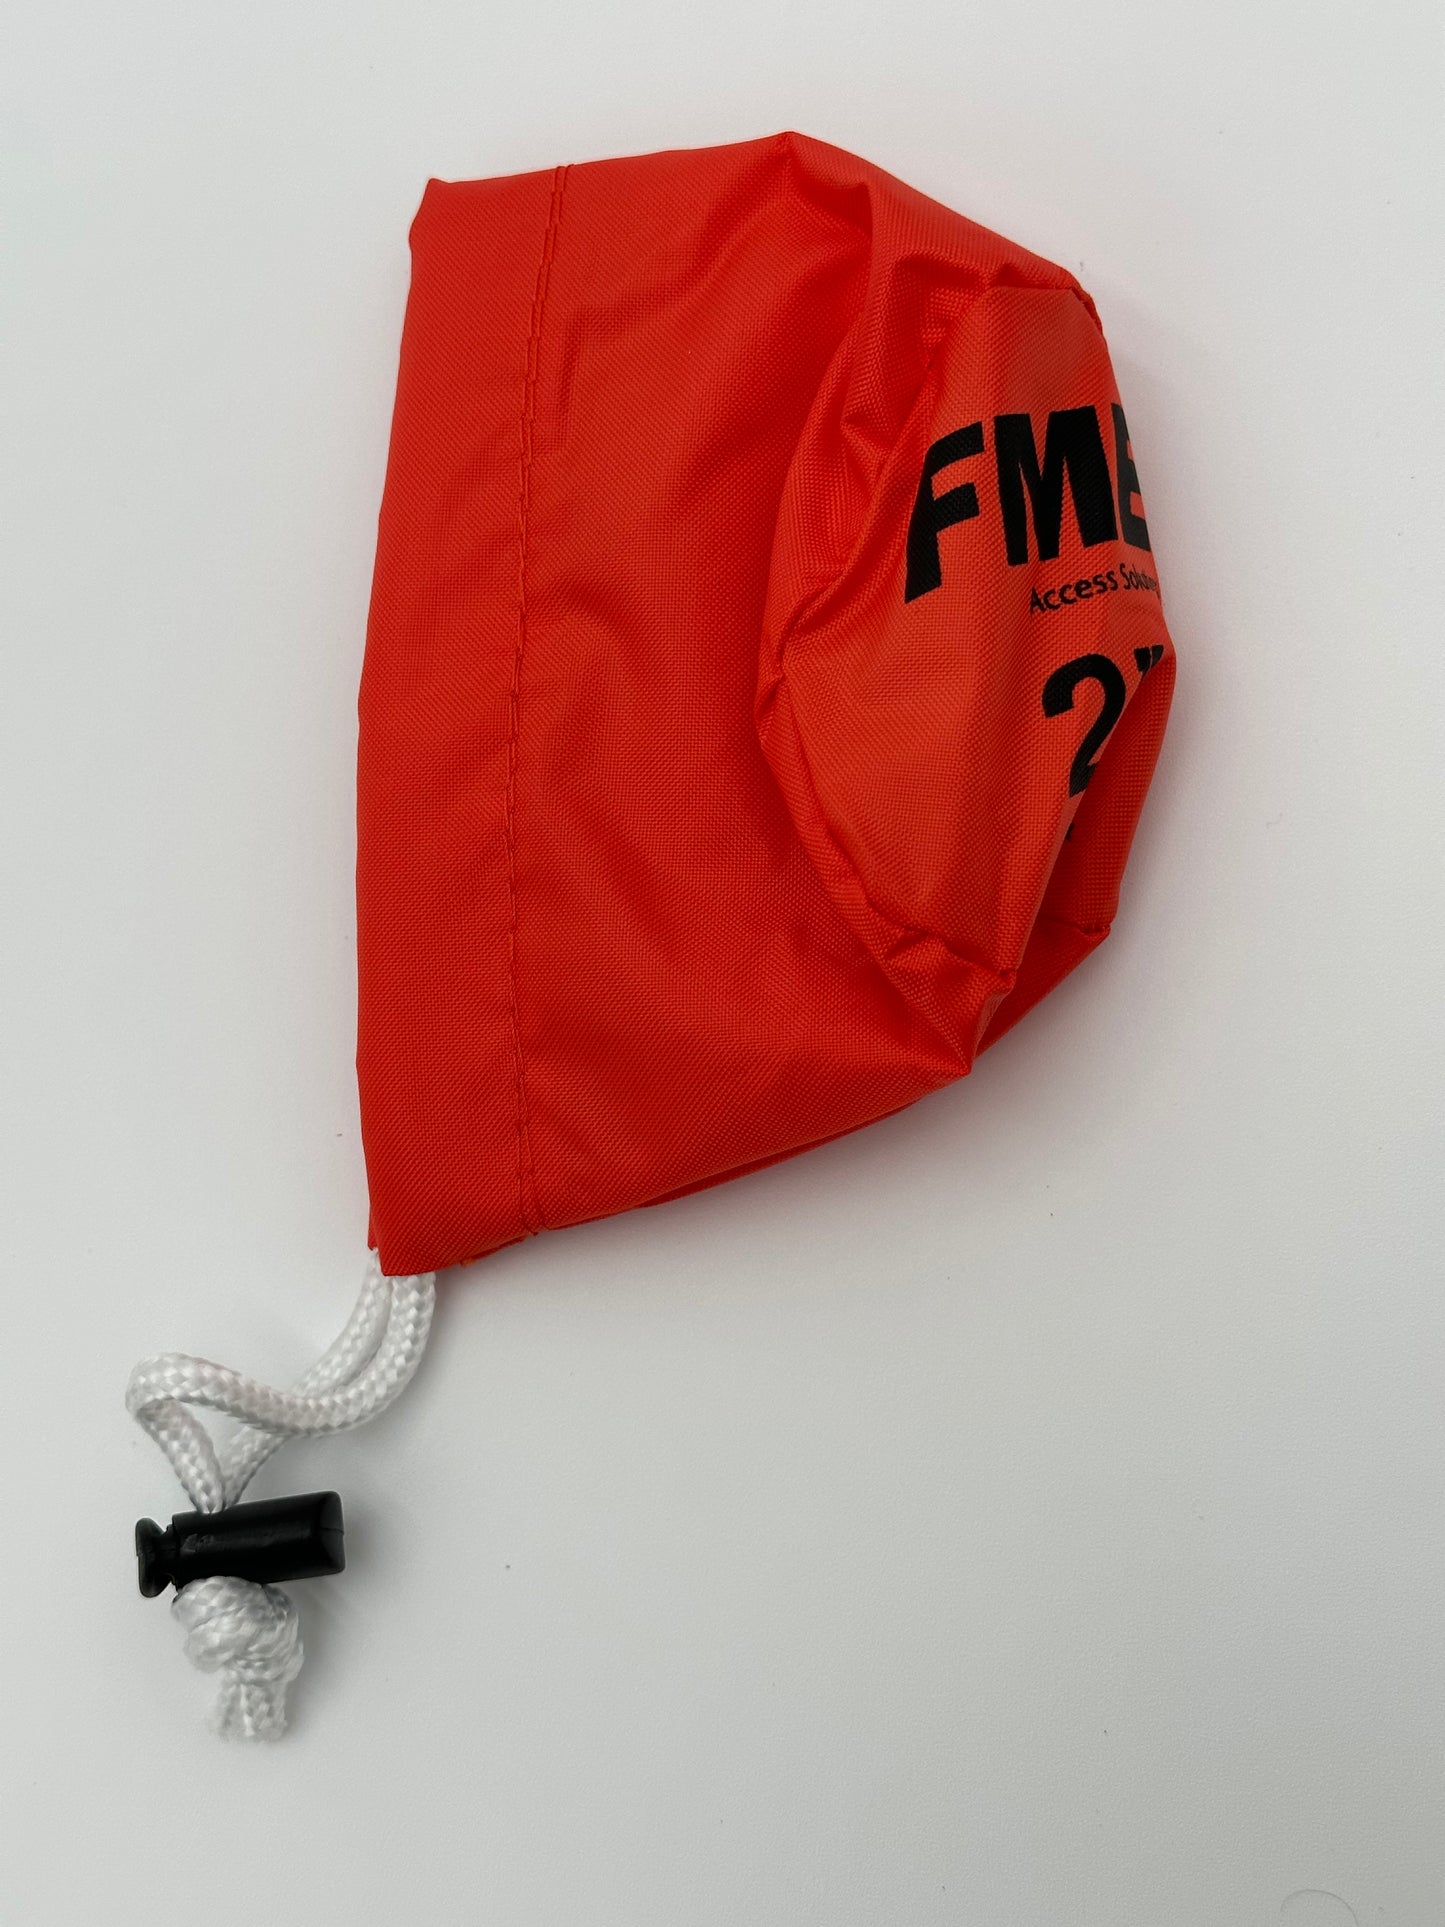 Orange 2" FME Covers 50/PKG